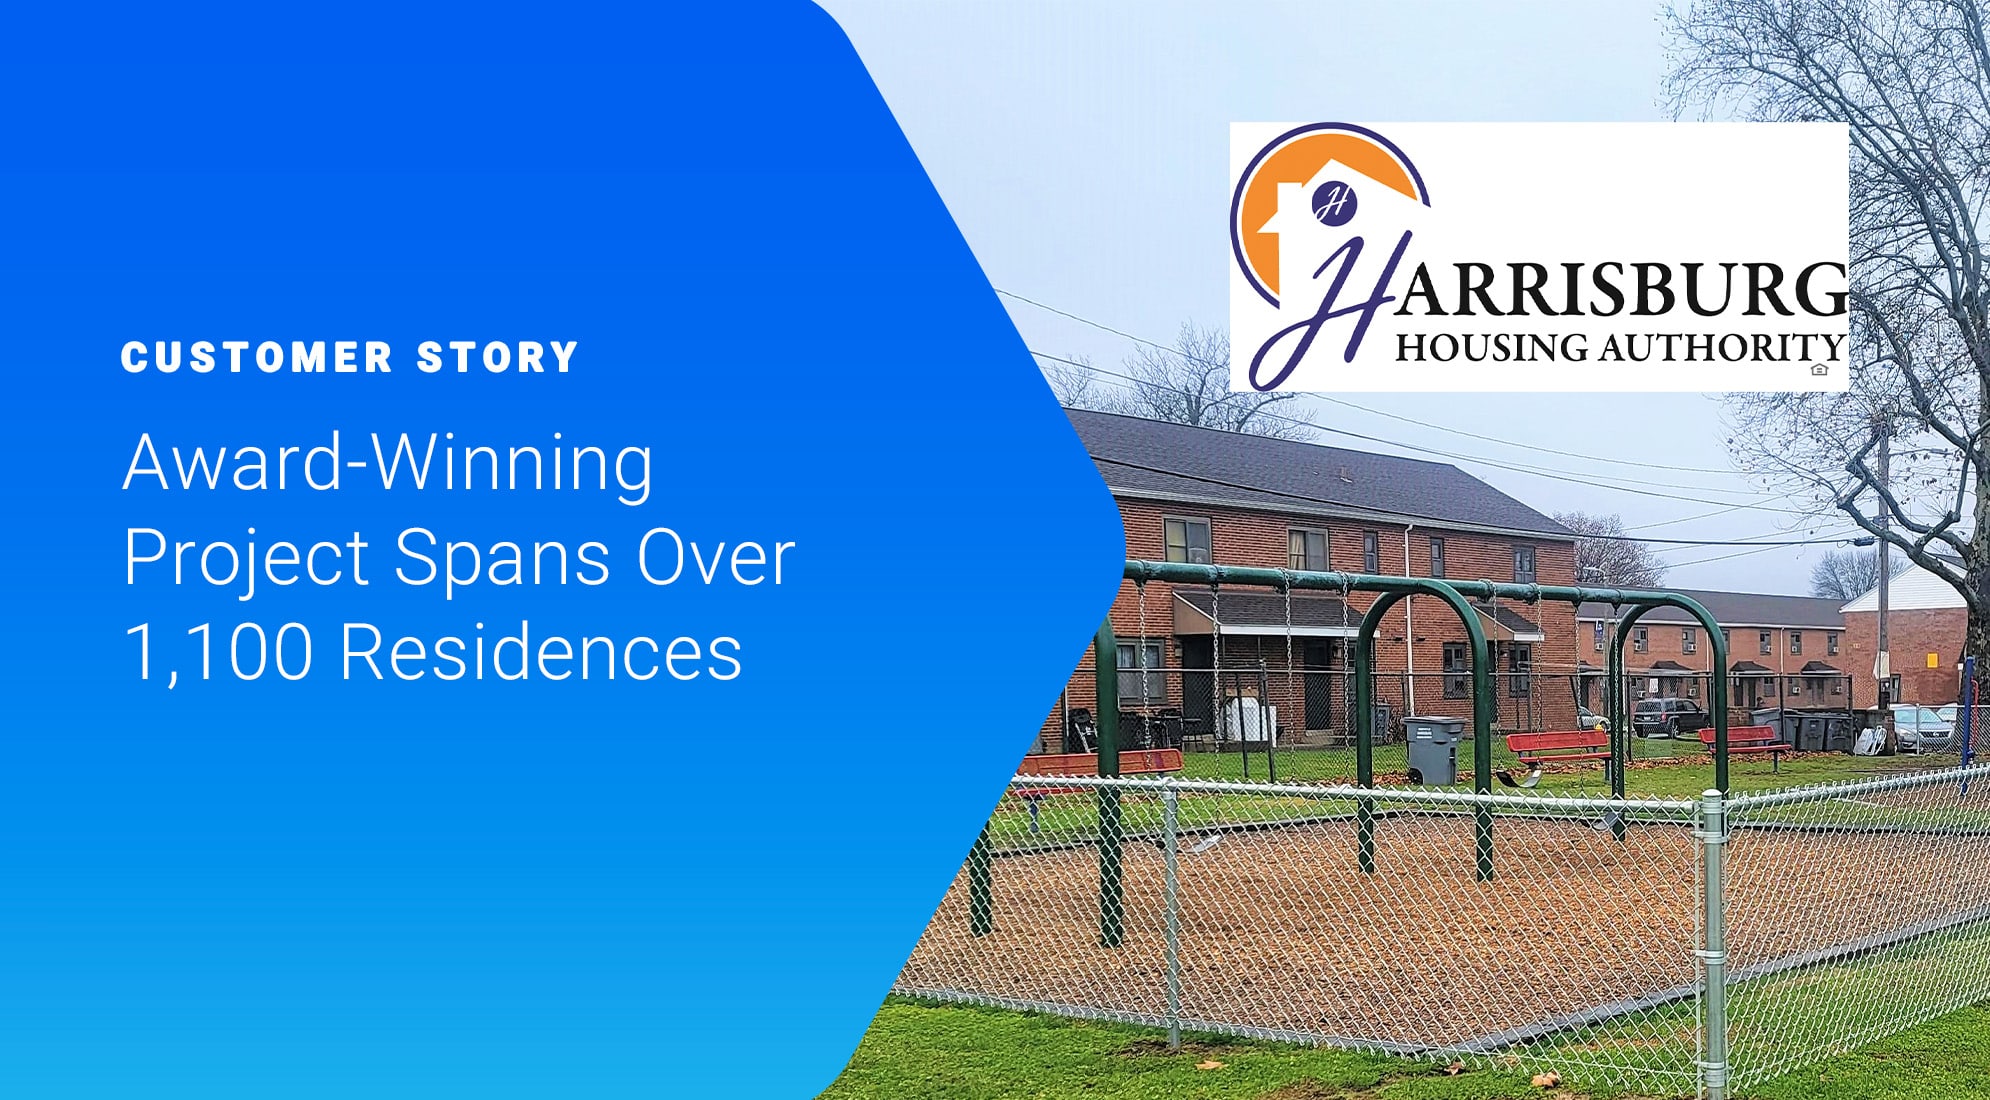 Harrisburg Housing Authority (HHA) Makes Sweeping Community Improvements 5